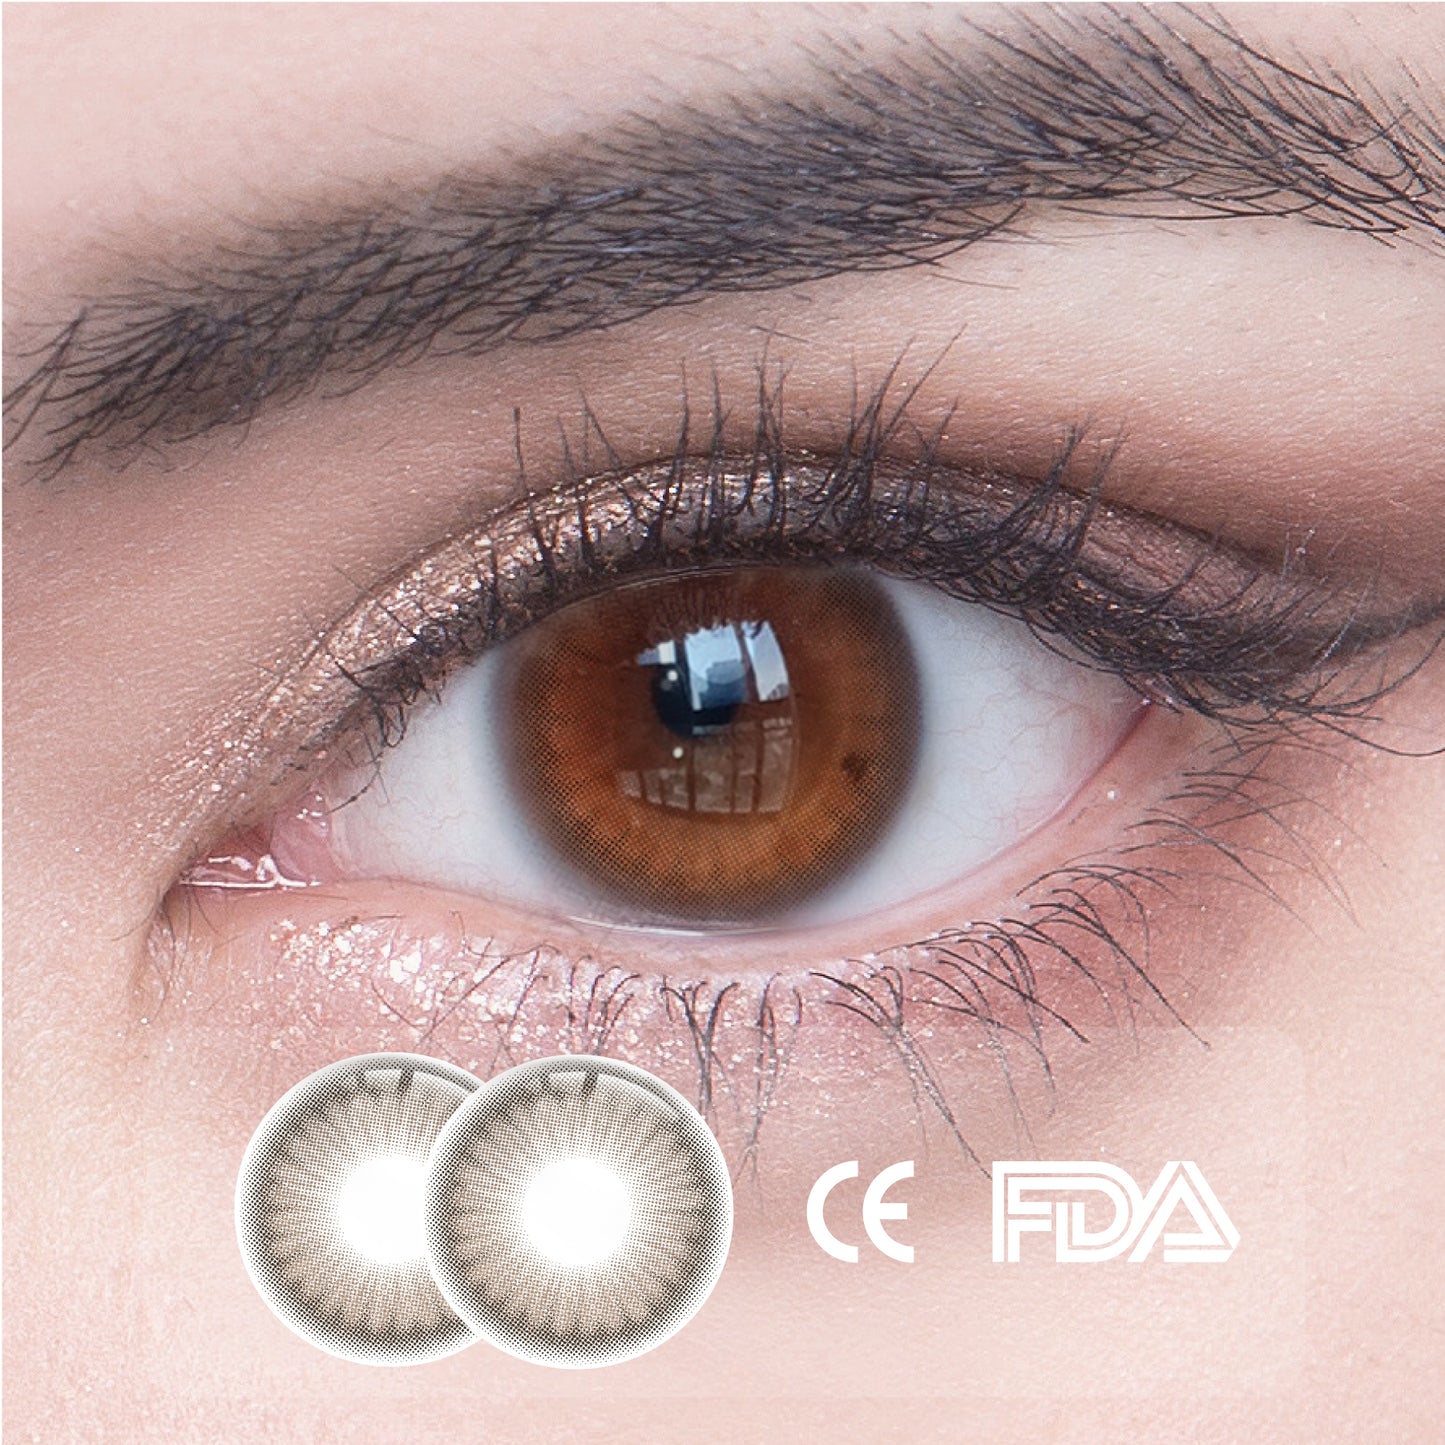 1pcs FDA Certificate Eyes Colorful Contact Lenses - Rumba brown